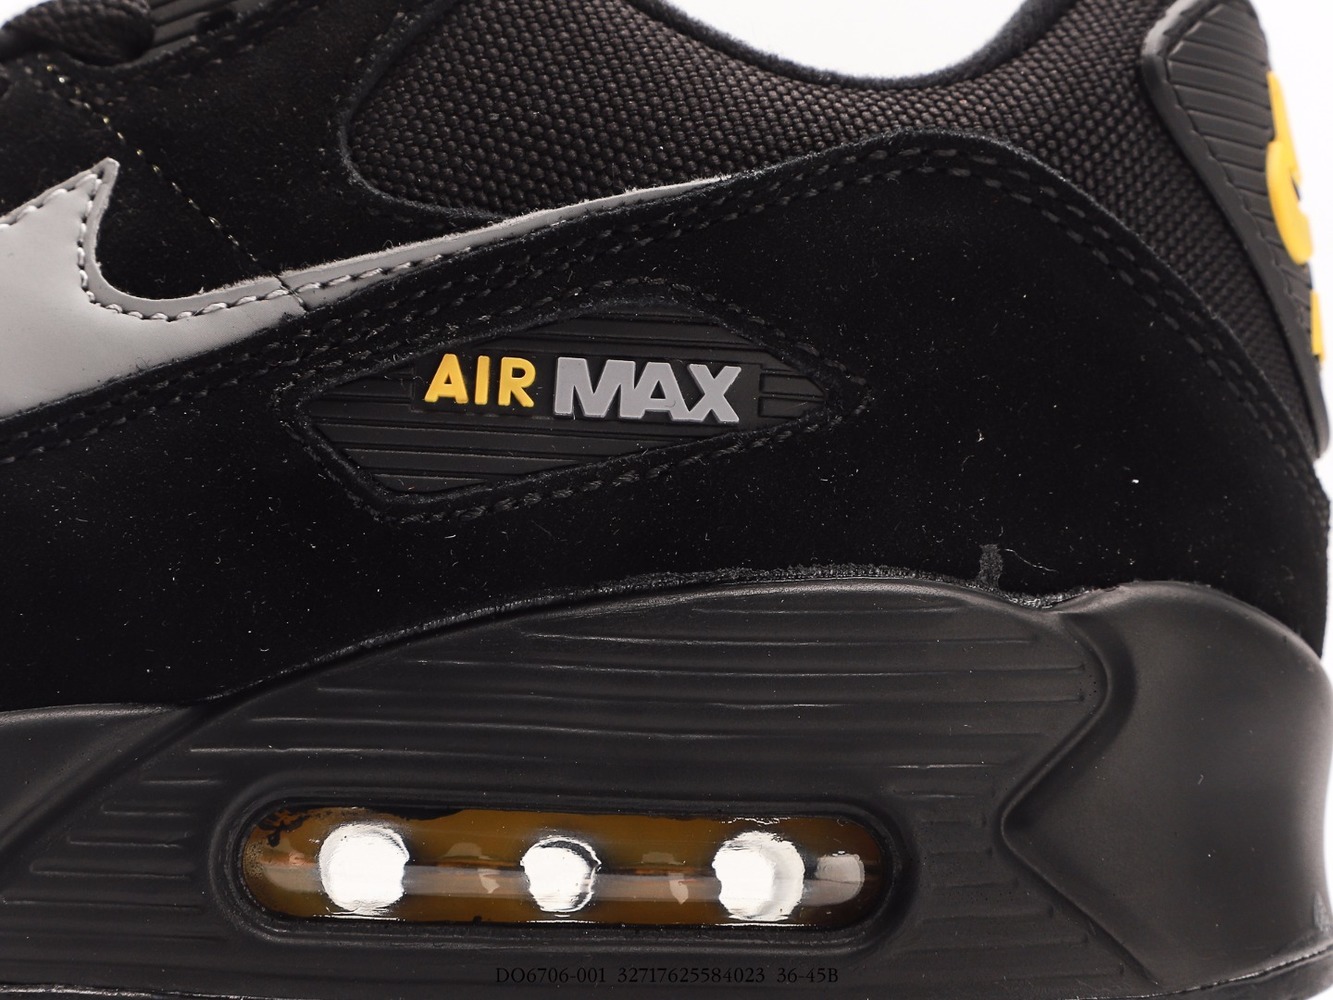 Nike Air Max 90 Black Yellow Strike Metallic Cool Grey_DO6706-001